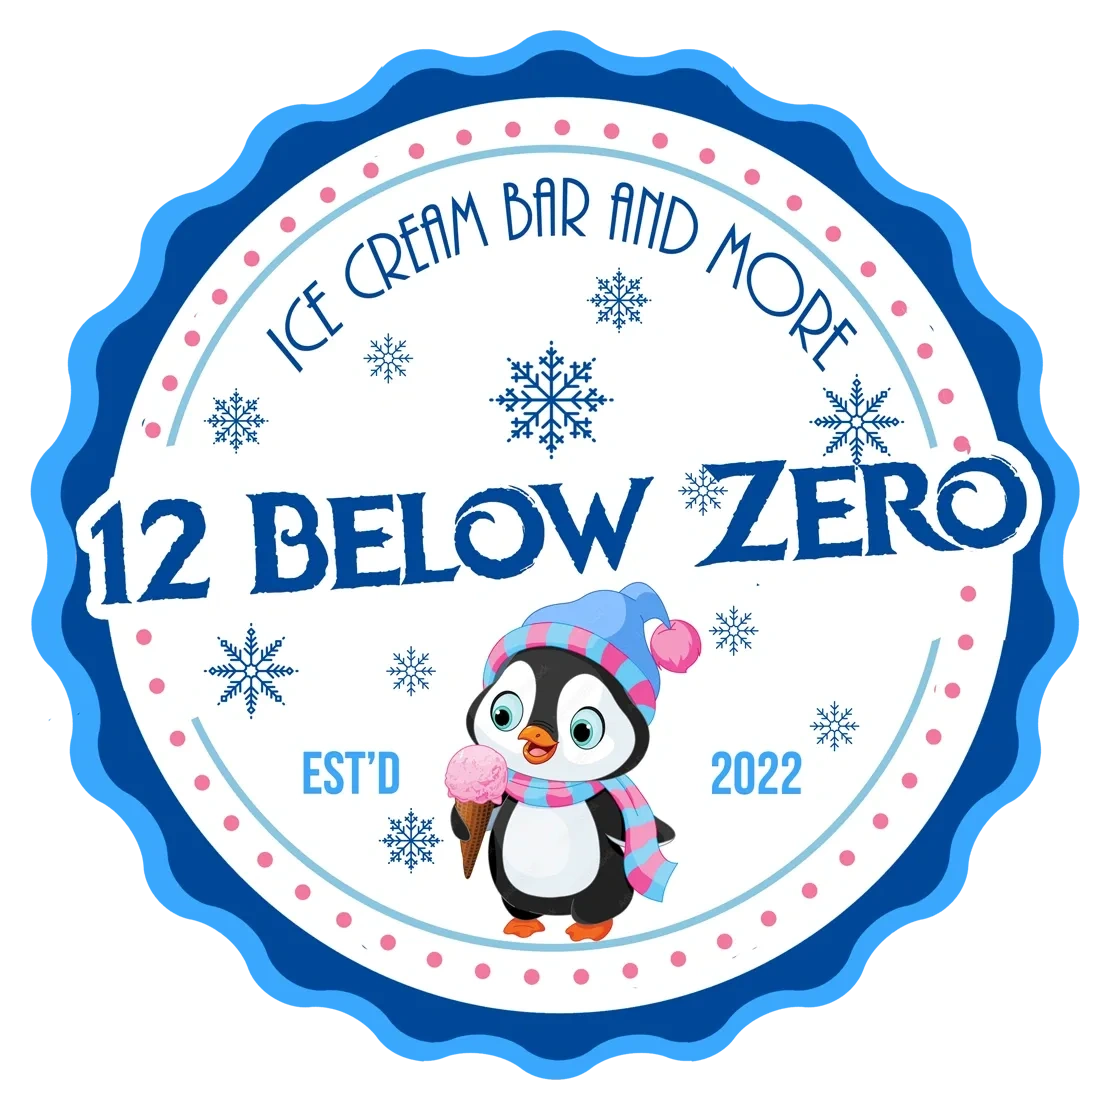 12 Below Zero Ice Cream Bar & More